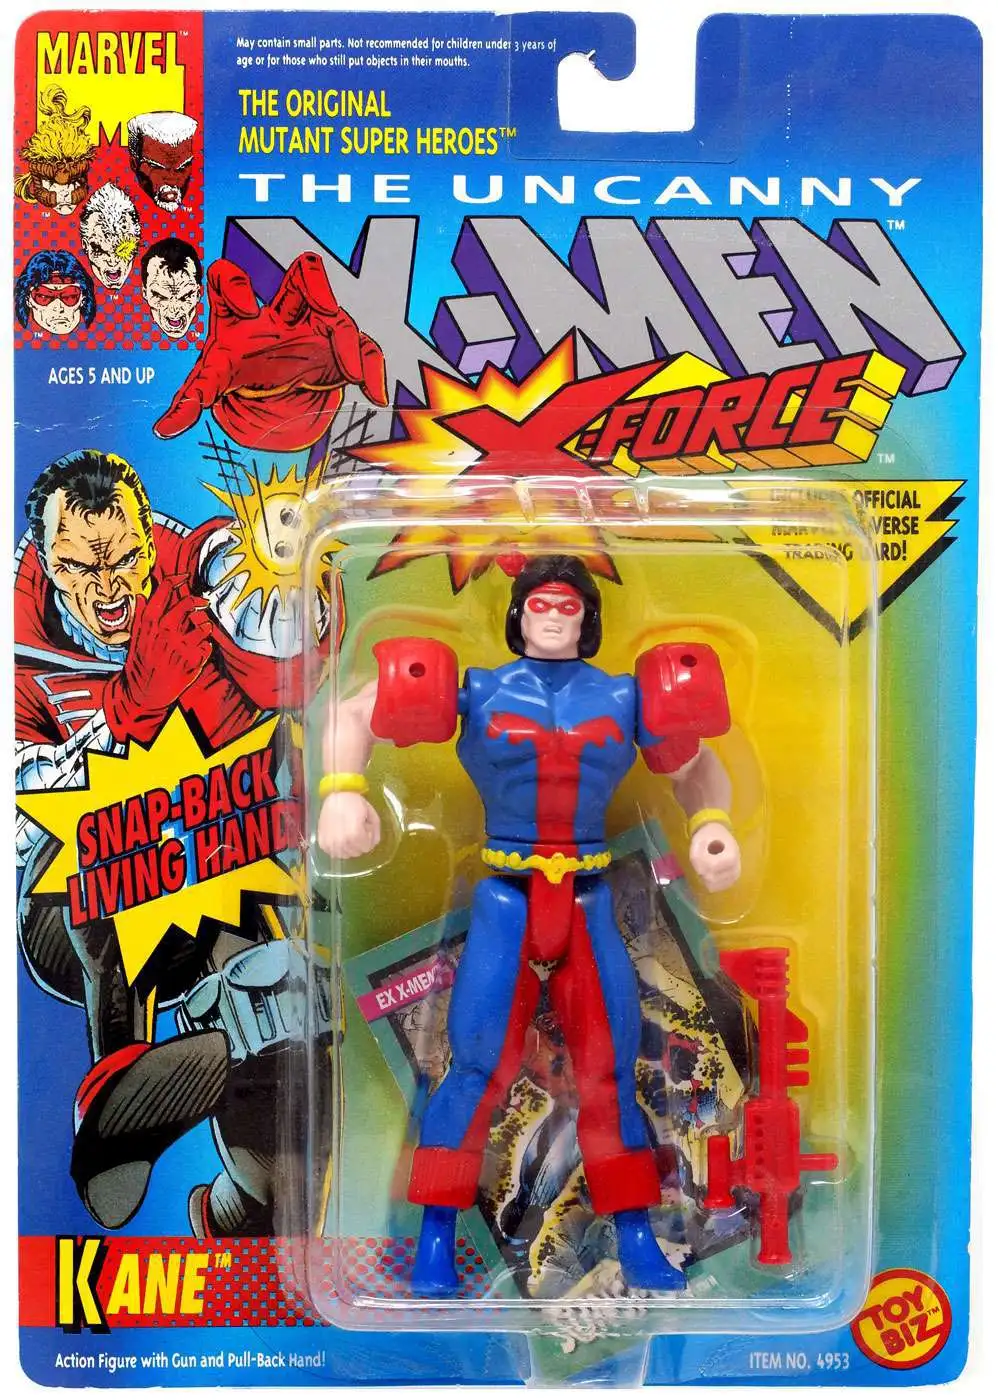 Warpath X-men X-force 5 Inch Figure Marvel 1992 ToyBiz for sale online 